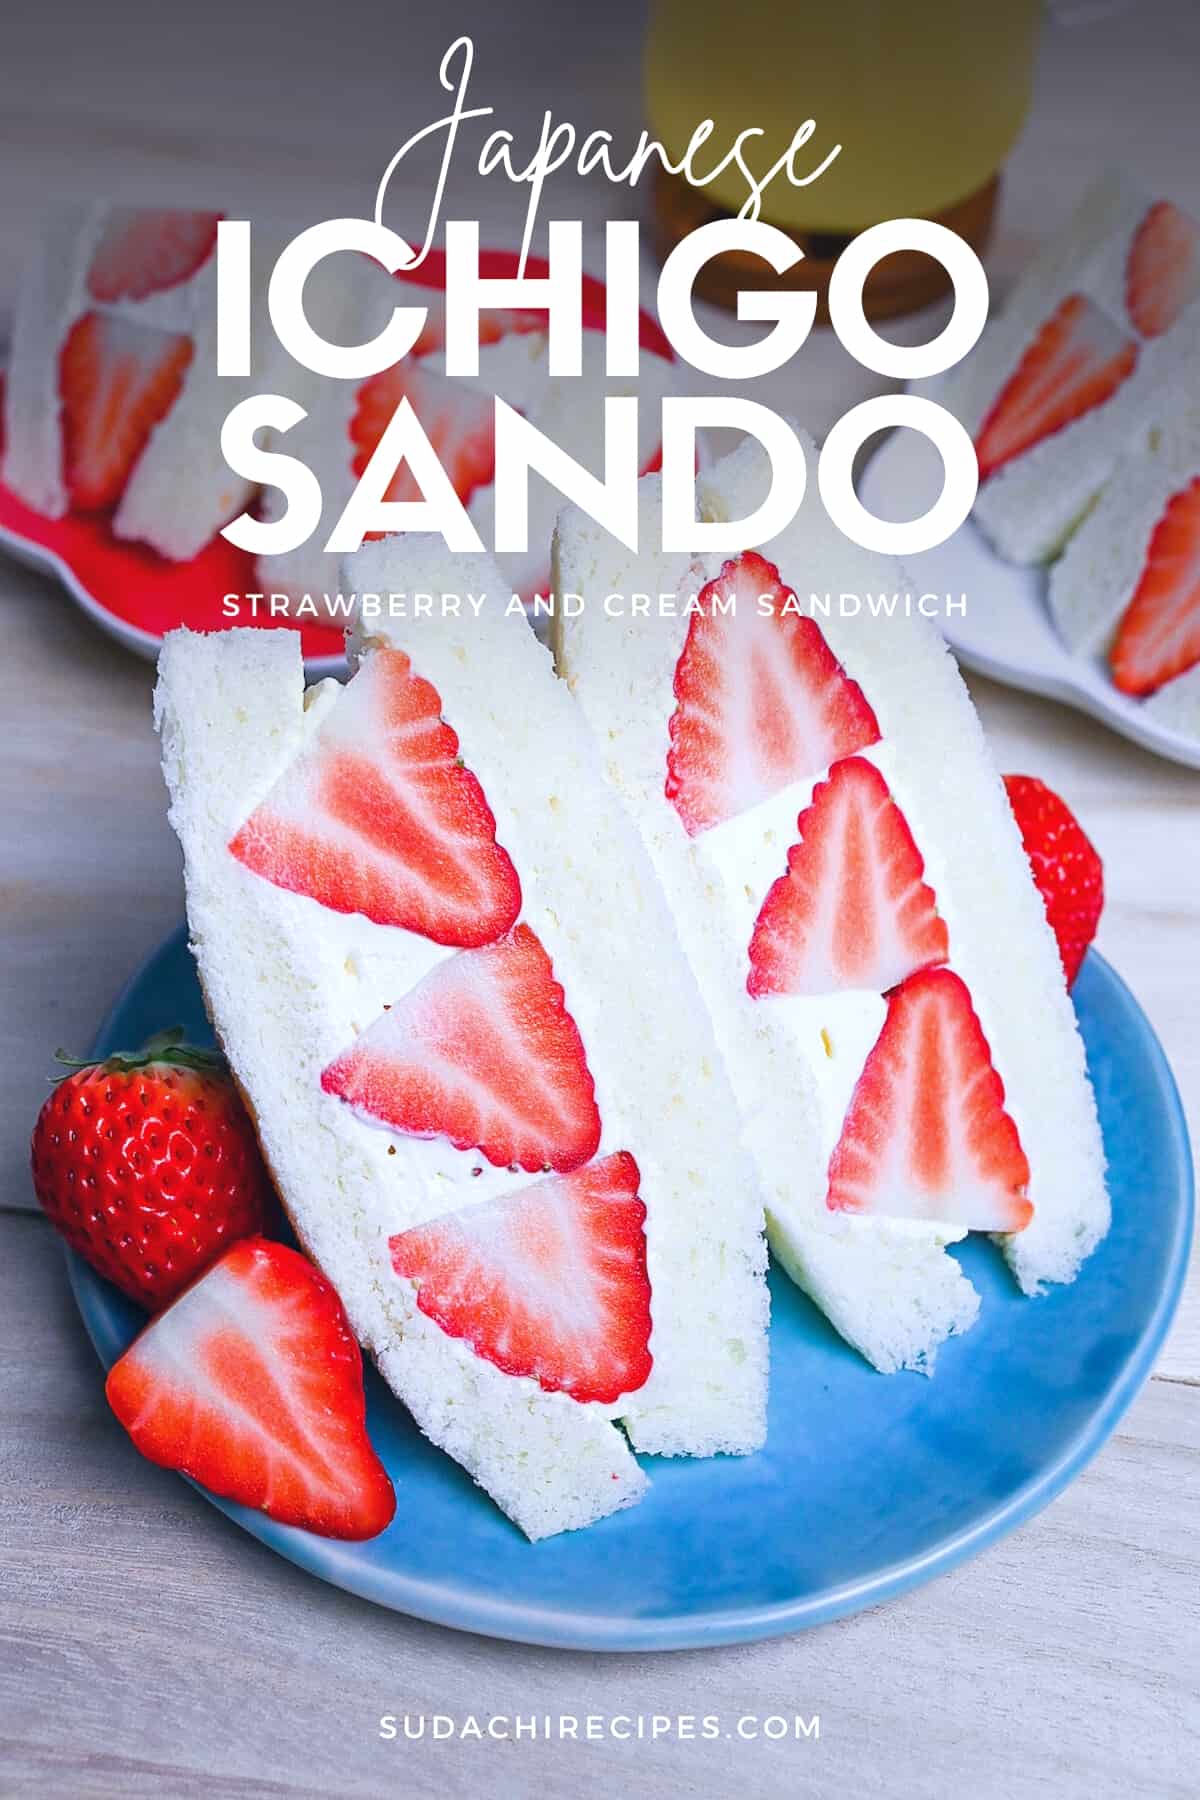 Japanese ichigo sando (strawberry sandwich) cut into triangles on a blue plate